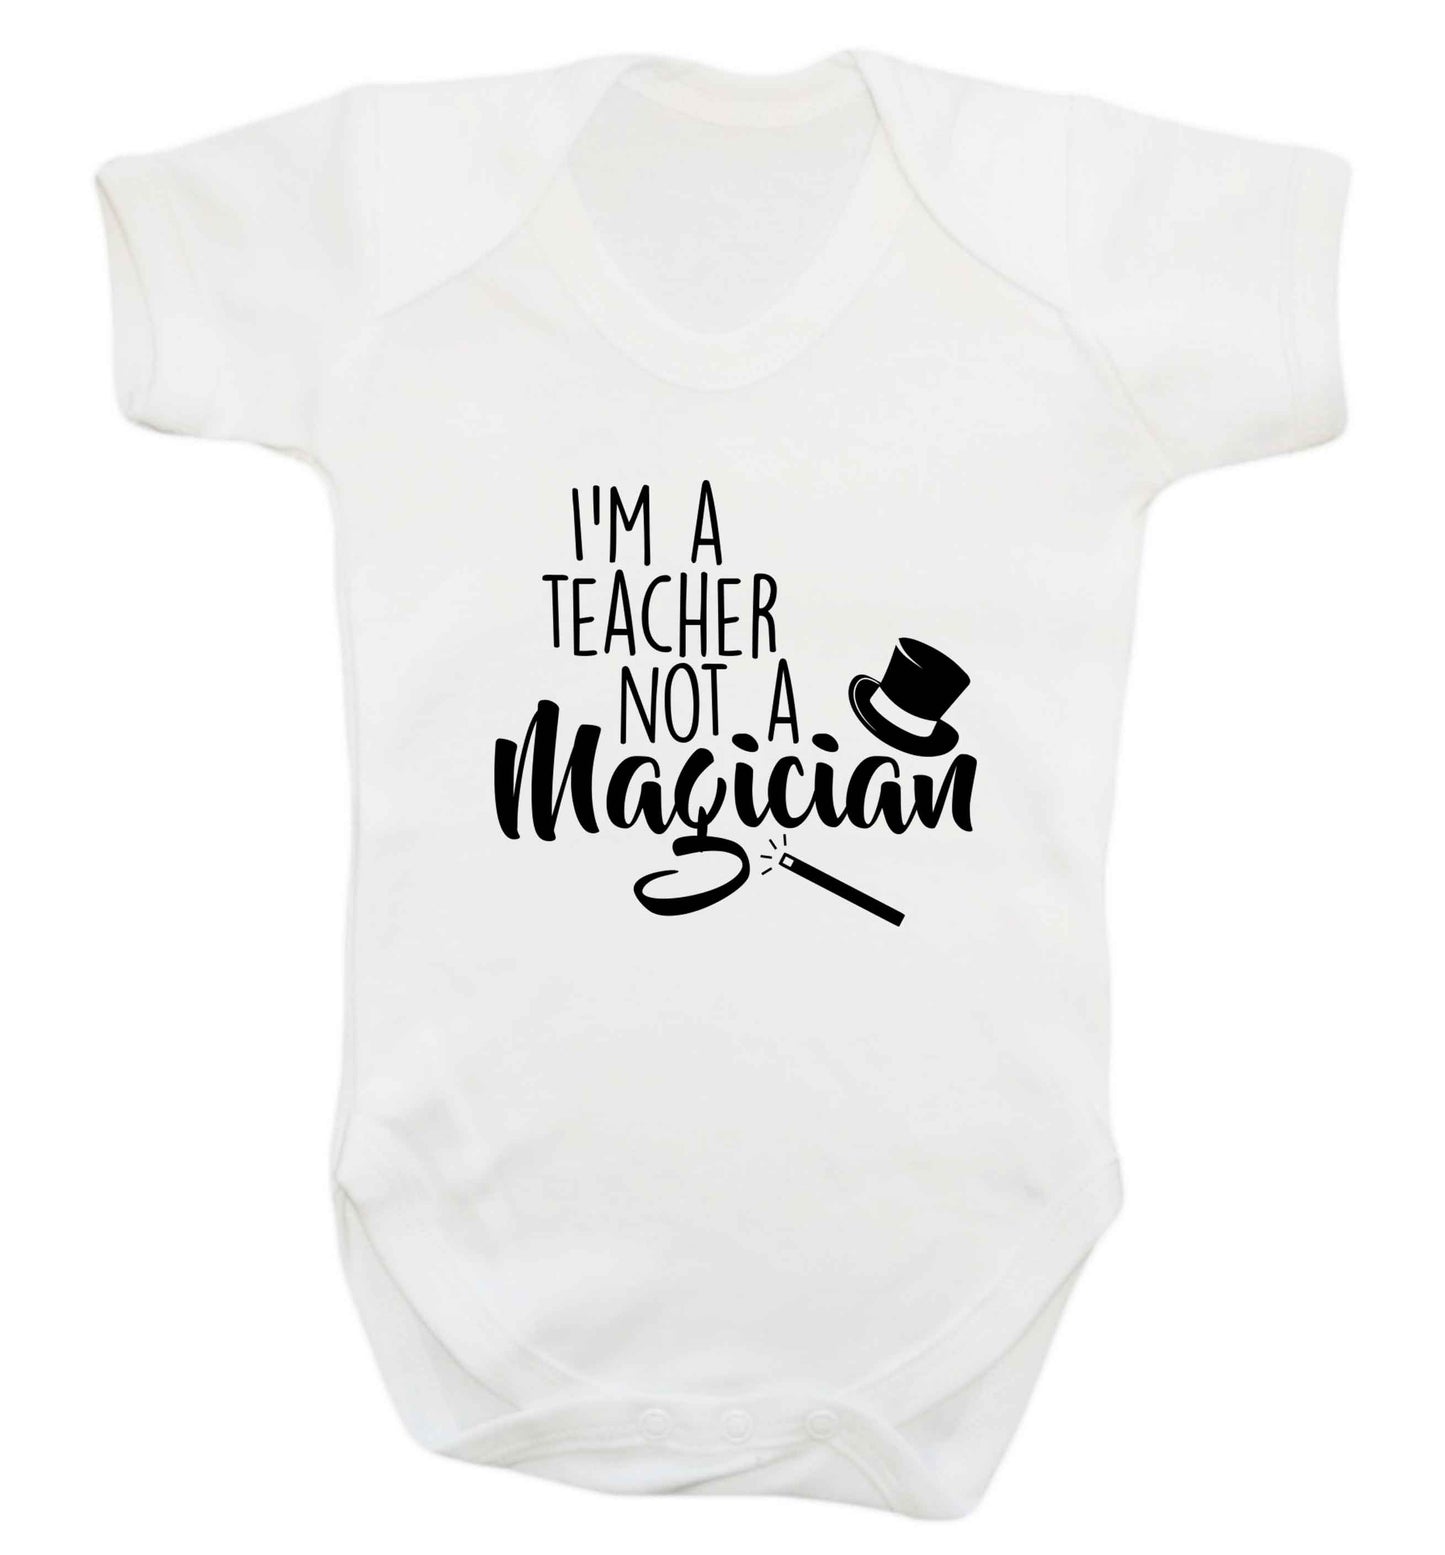 I'm a teacher not a magician baby vest white 18-24 months